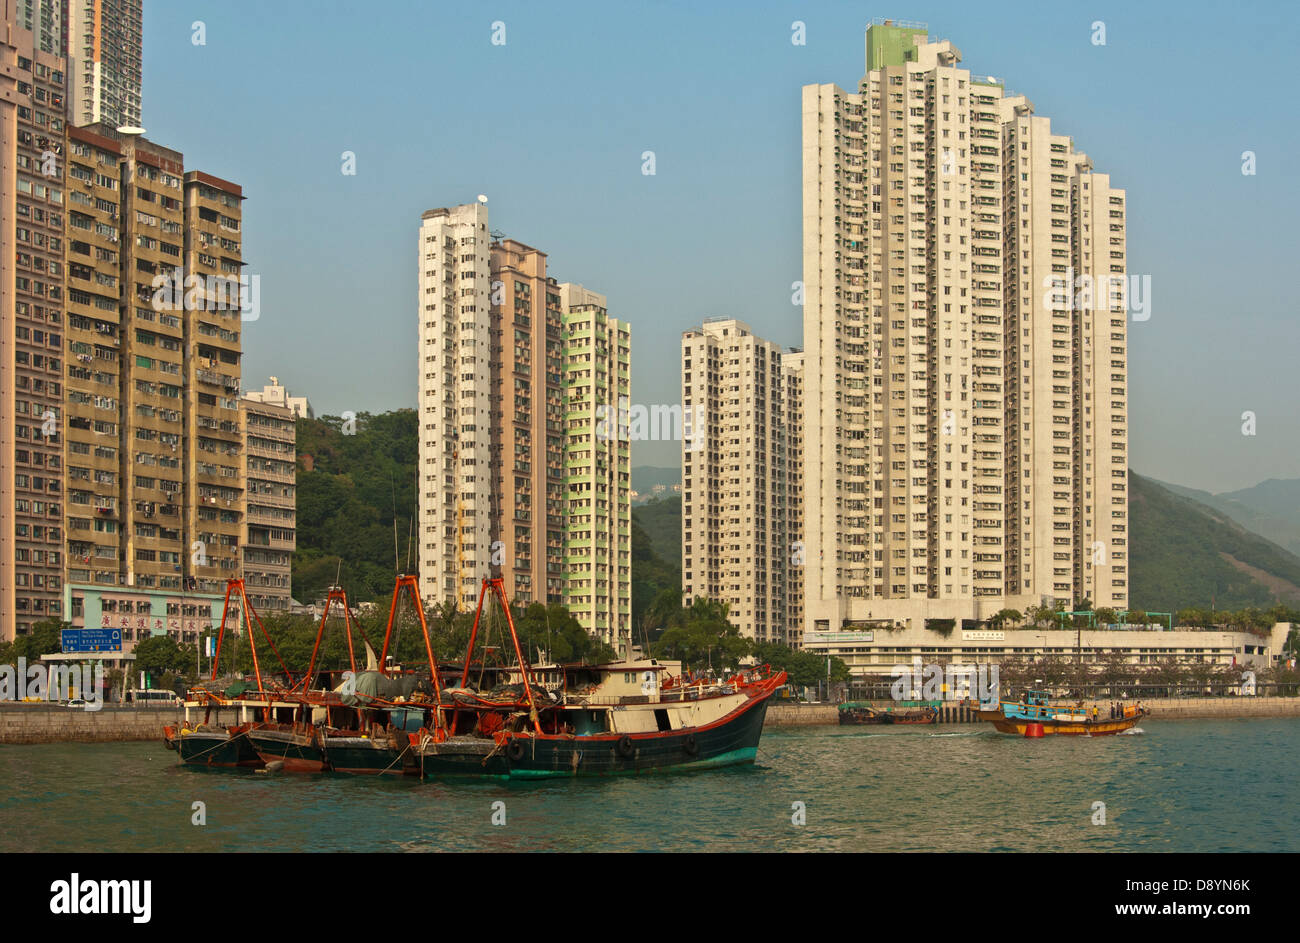 Grattacieli che si affaccia sul canale di Aberdeen, Aberdeen, Hong Kong Foto Stock